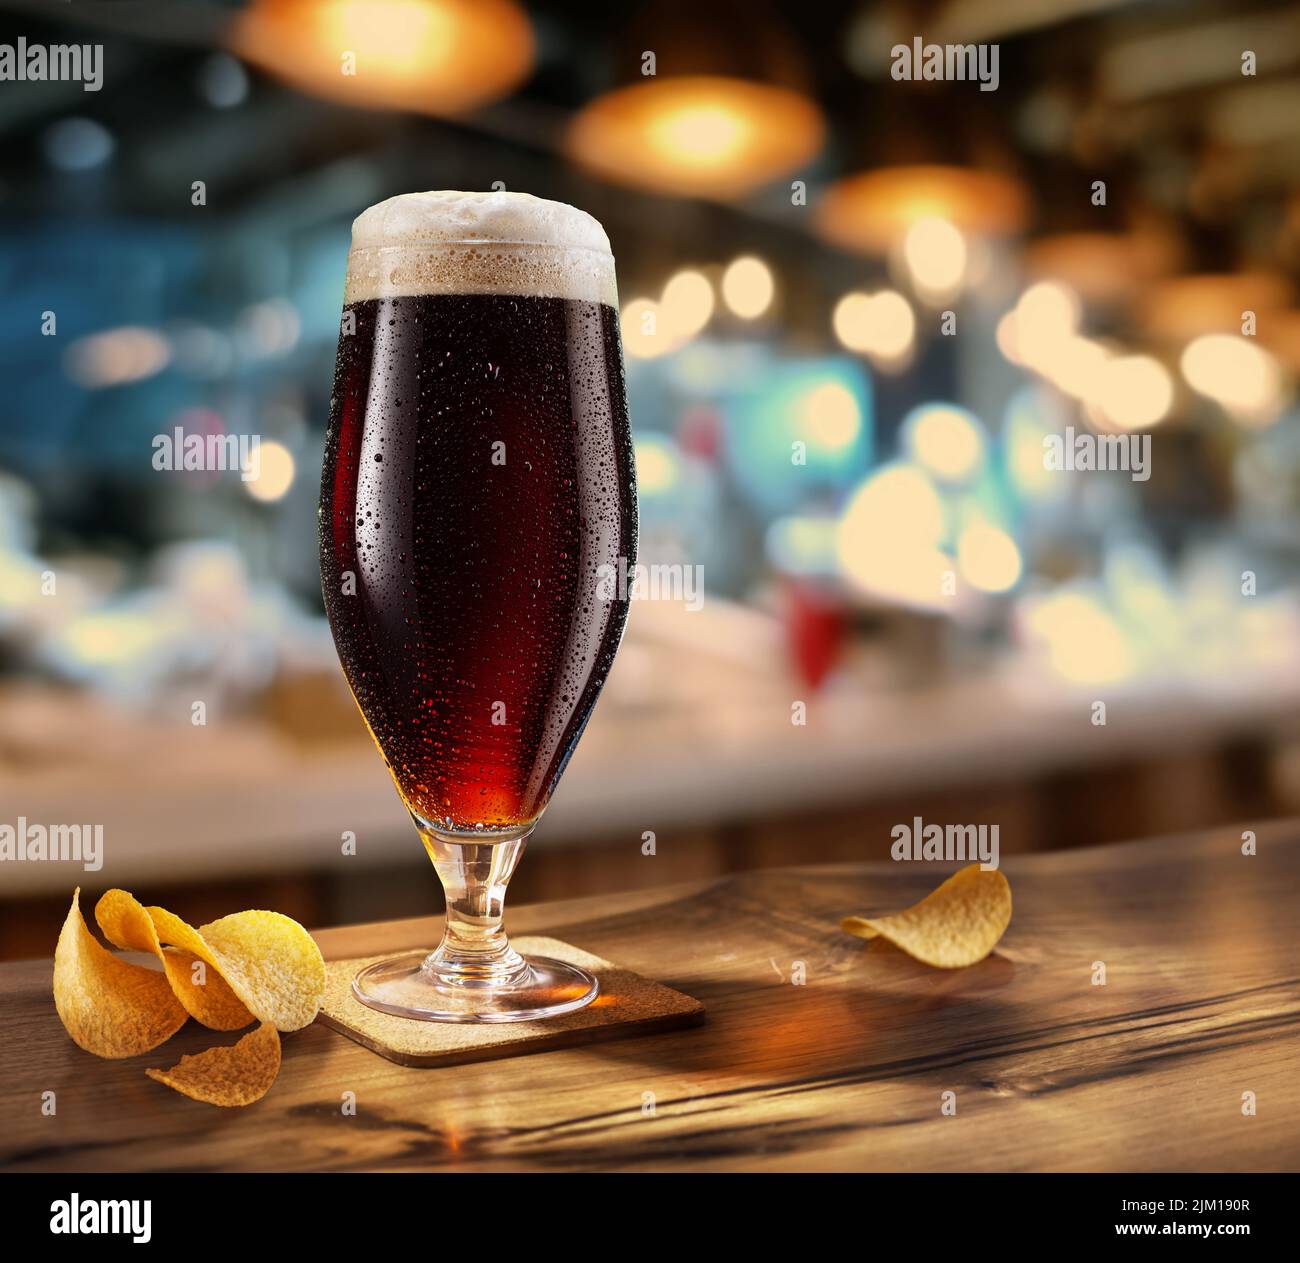 Vaso frío de cerveza oscura sobre la mesa de madera. Interior de pub borroso al fondo. Foto de stock